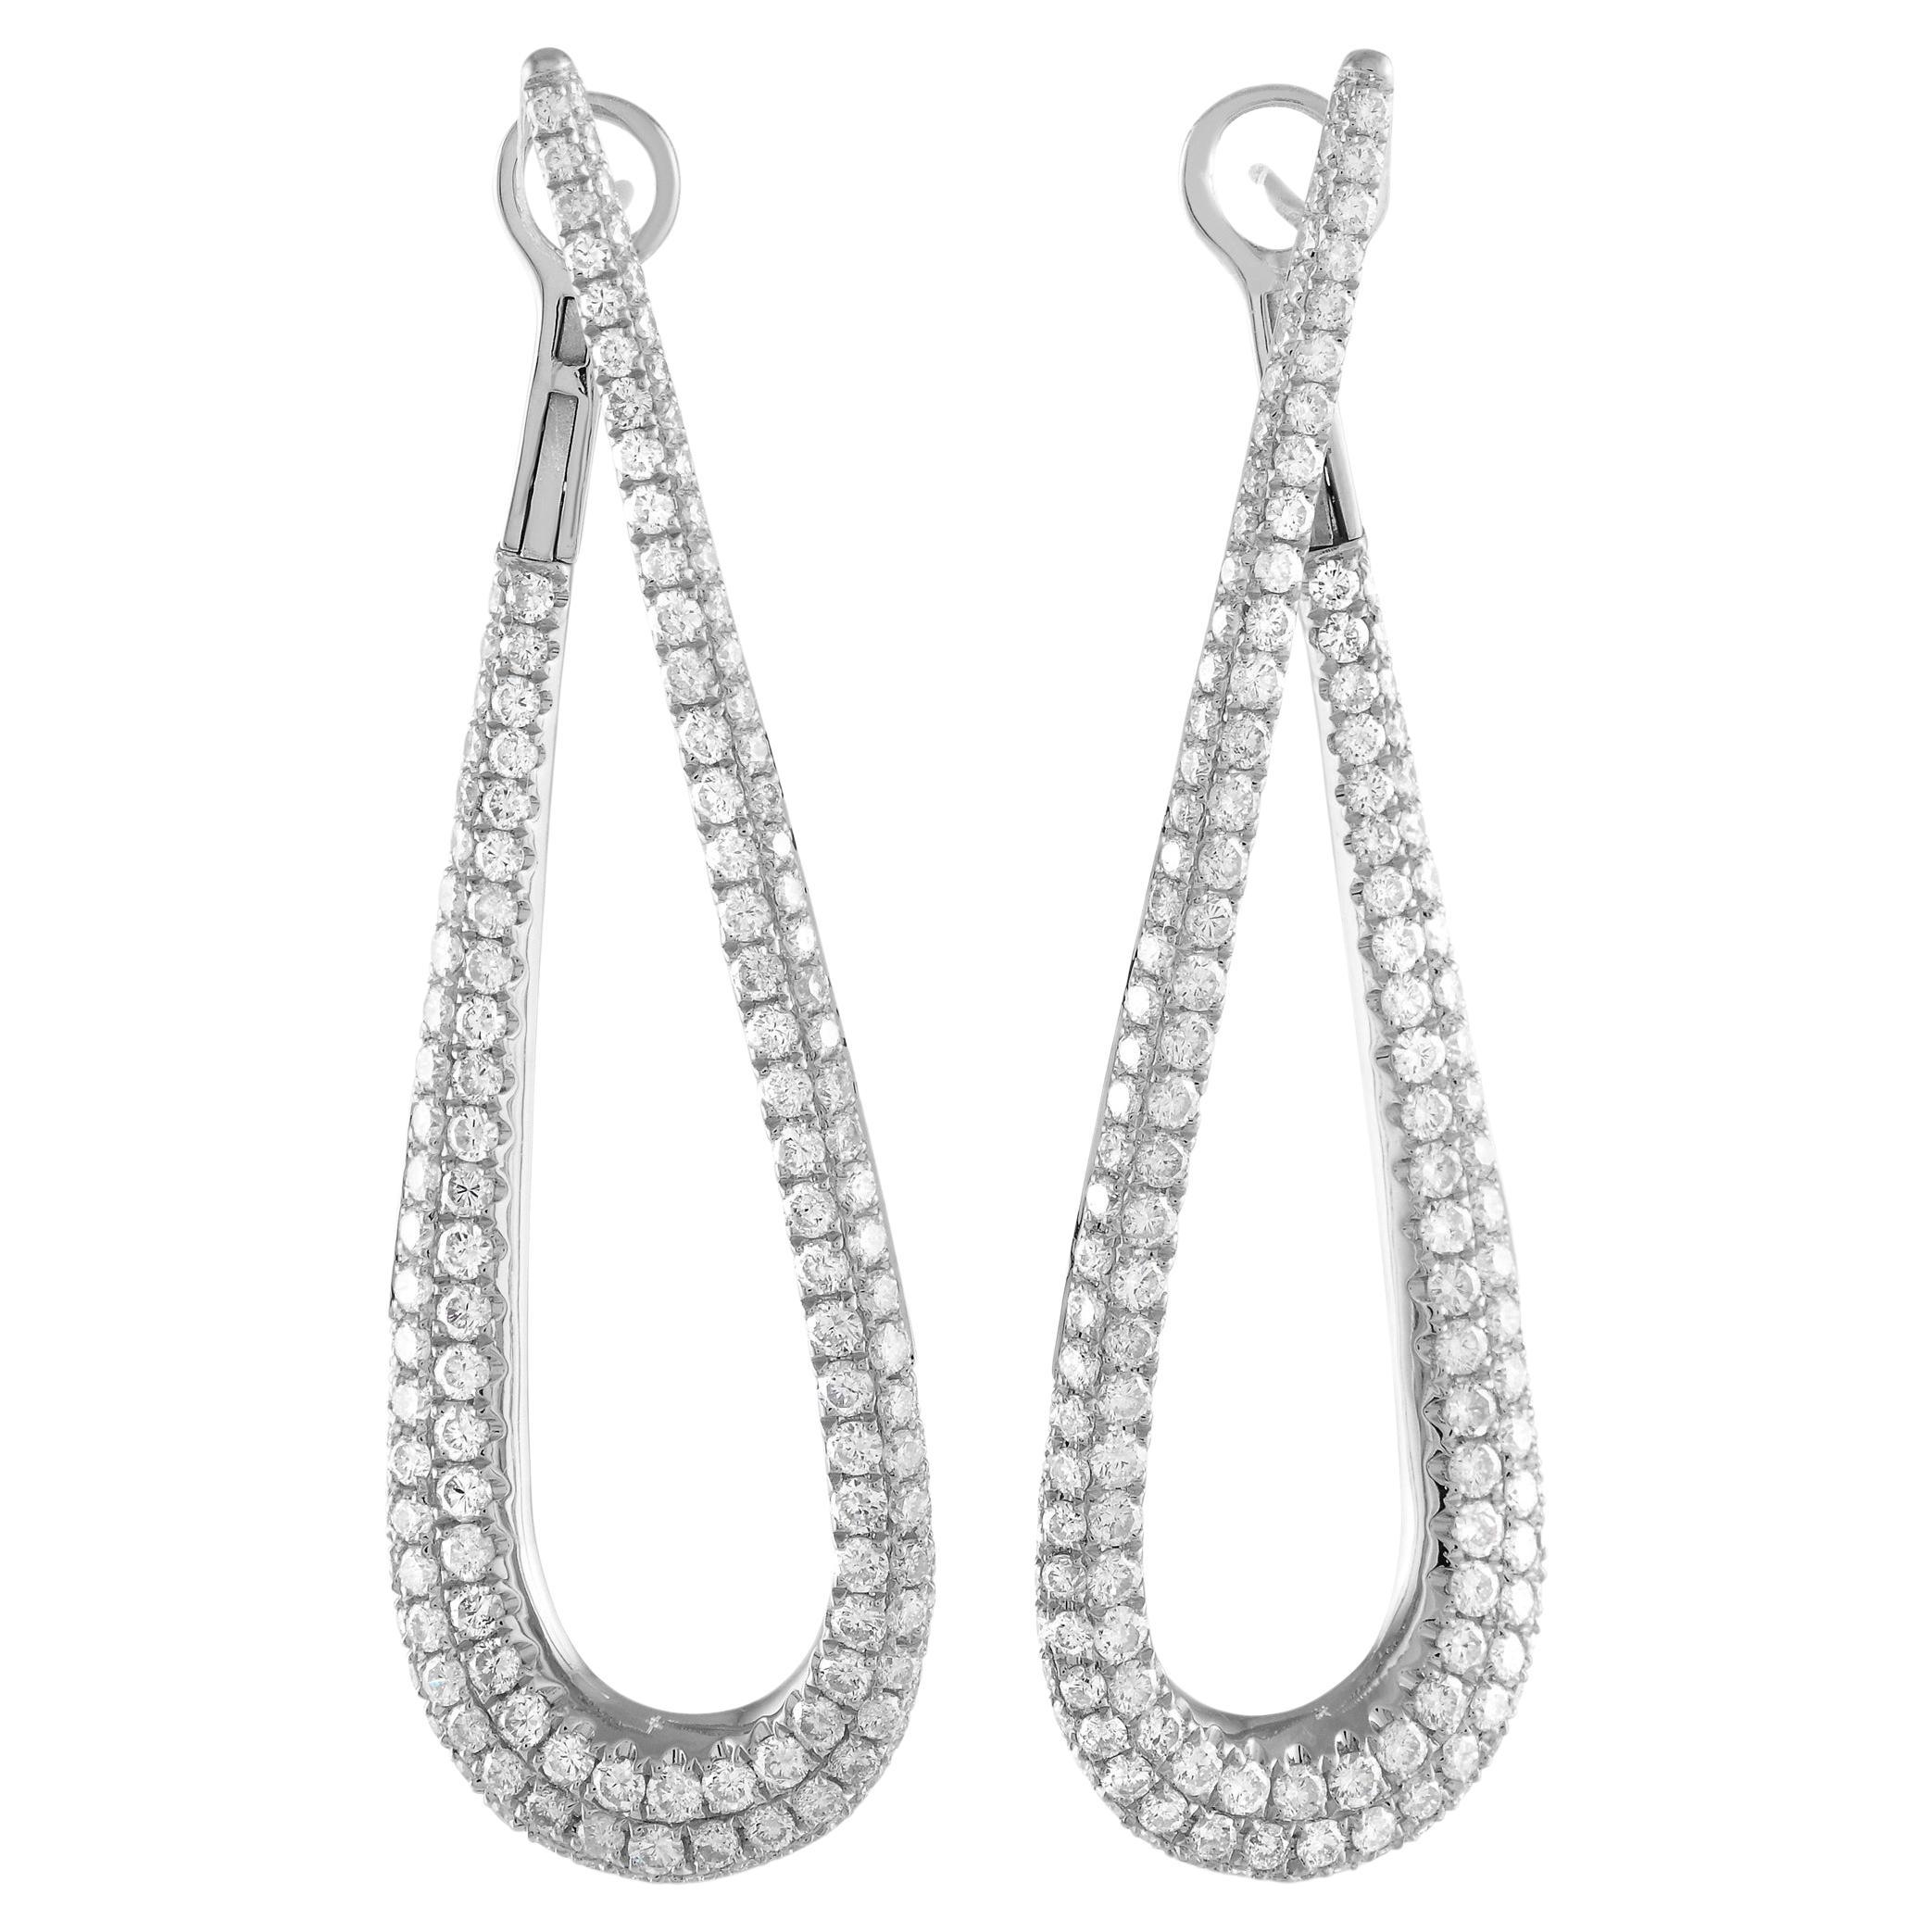 LB Exclusive 18K White Gold 4.51ct Diamond Earrings